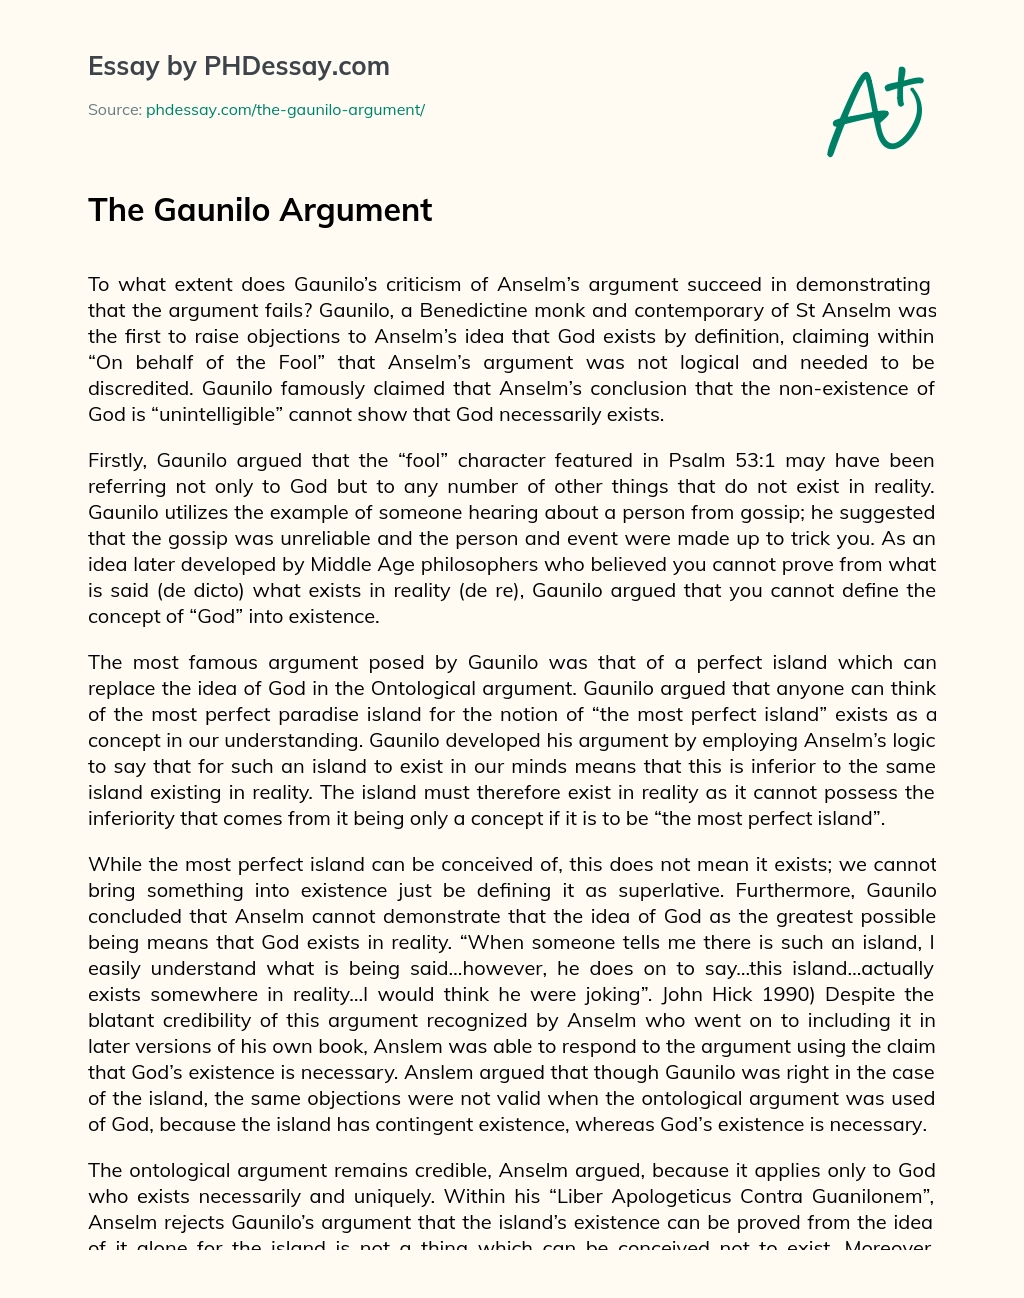 The Gaunilo Argument essay